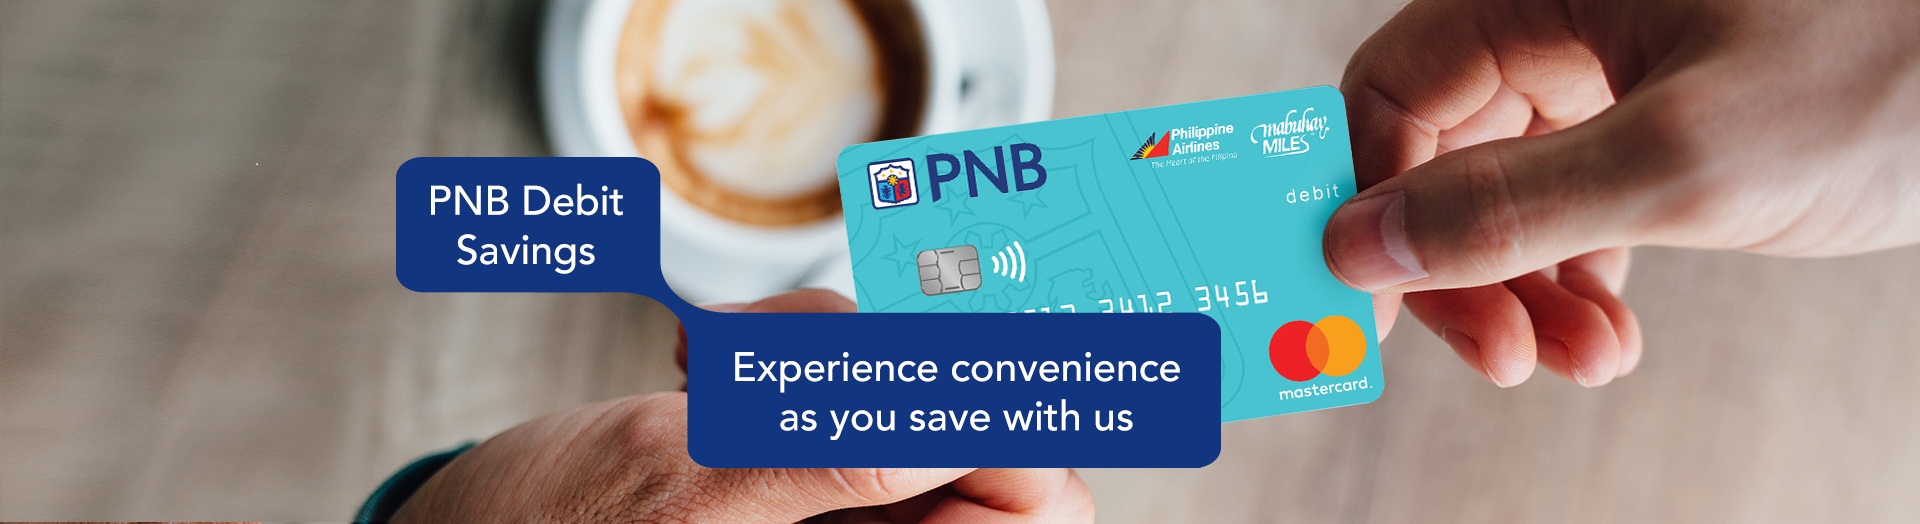 PNB PAL Mabuhay Miles Debit Mastercard Savings